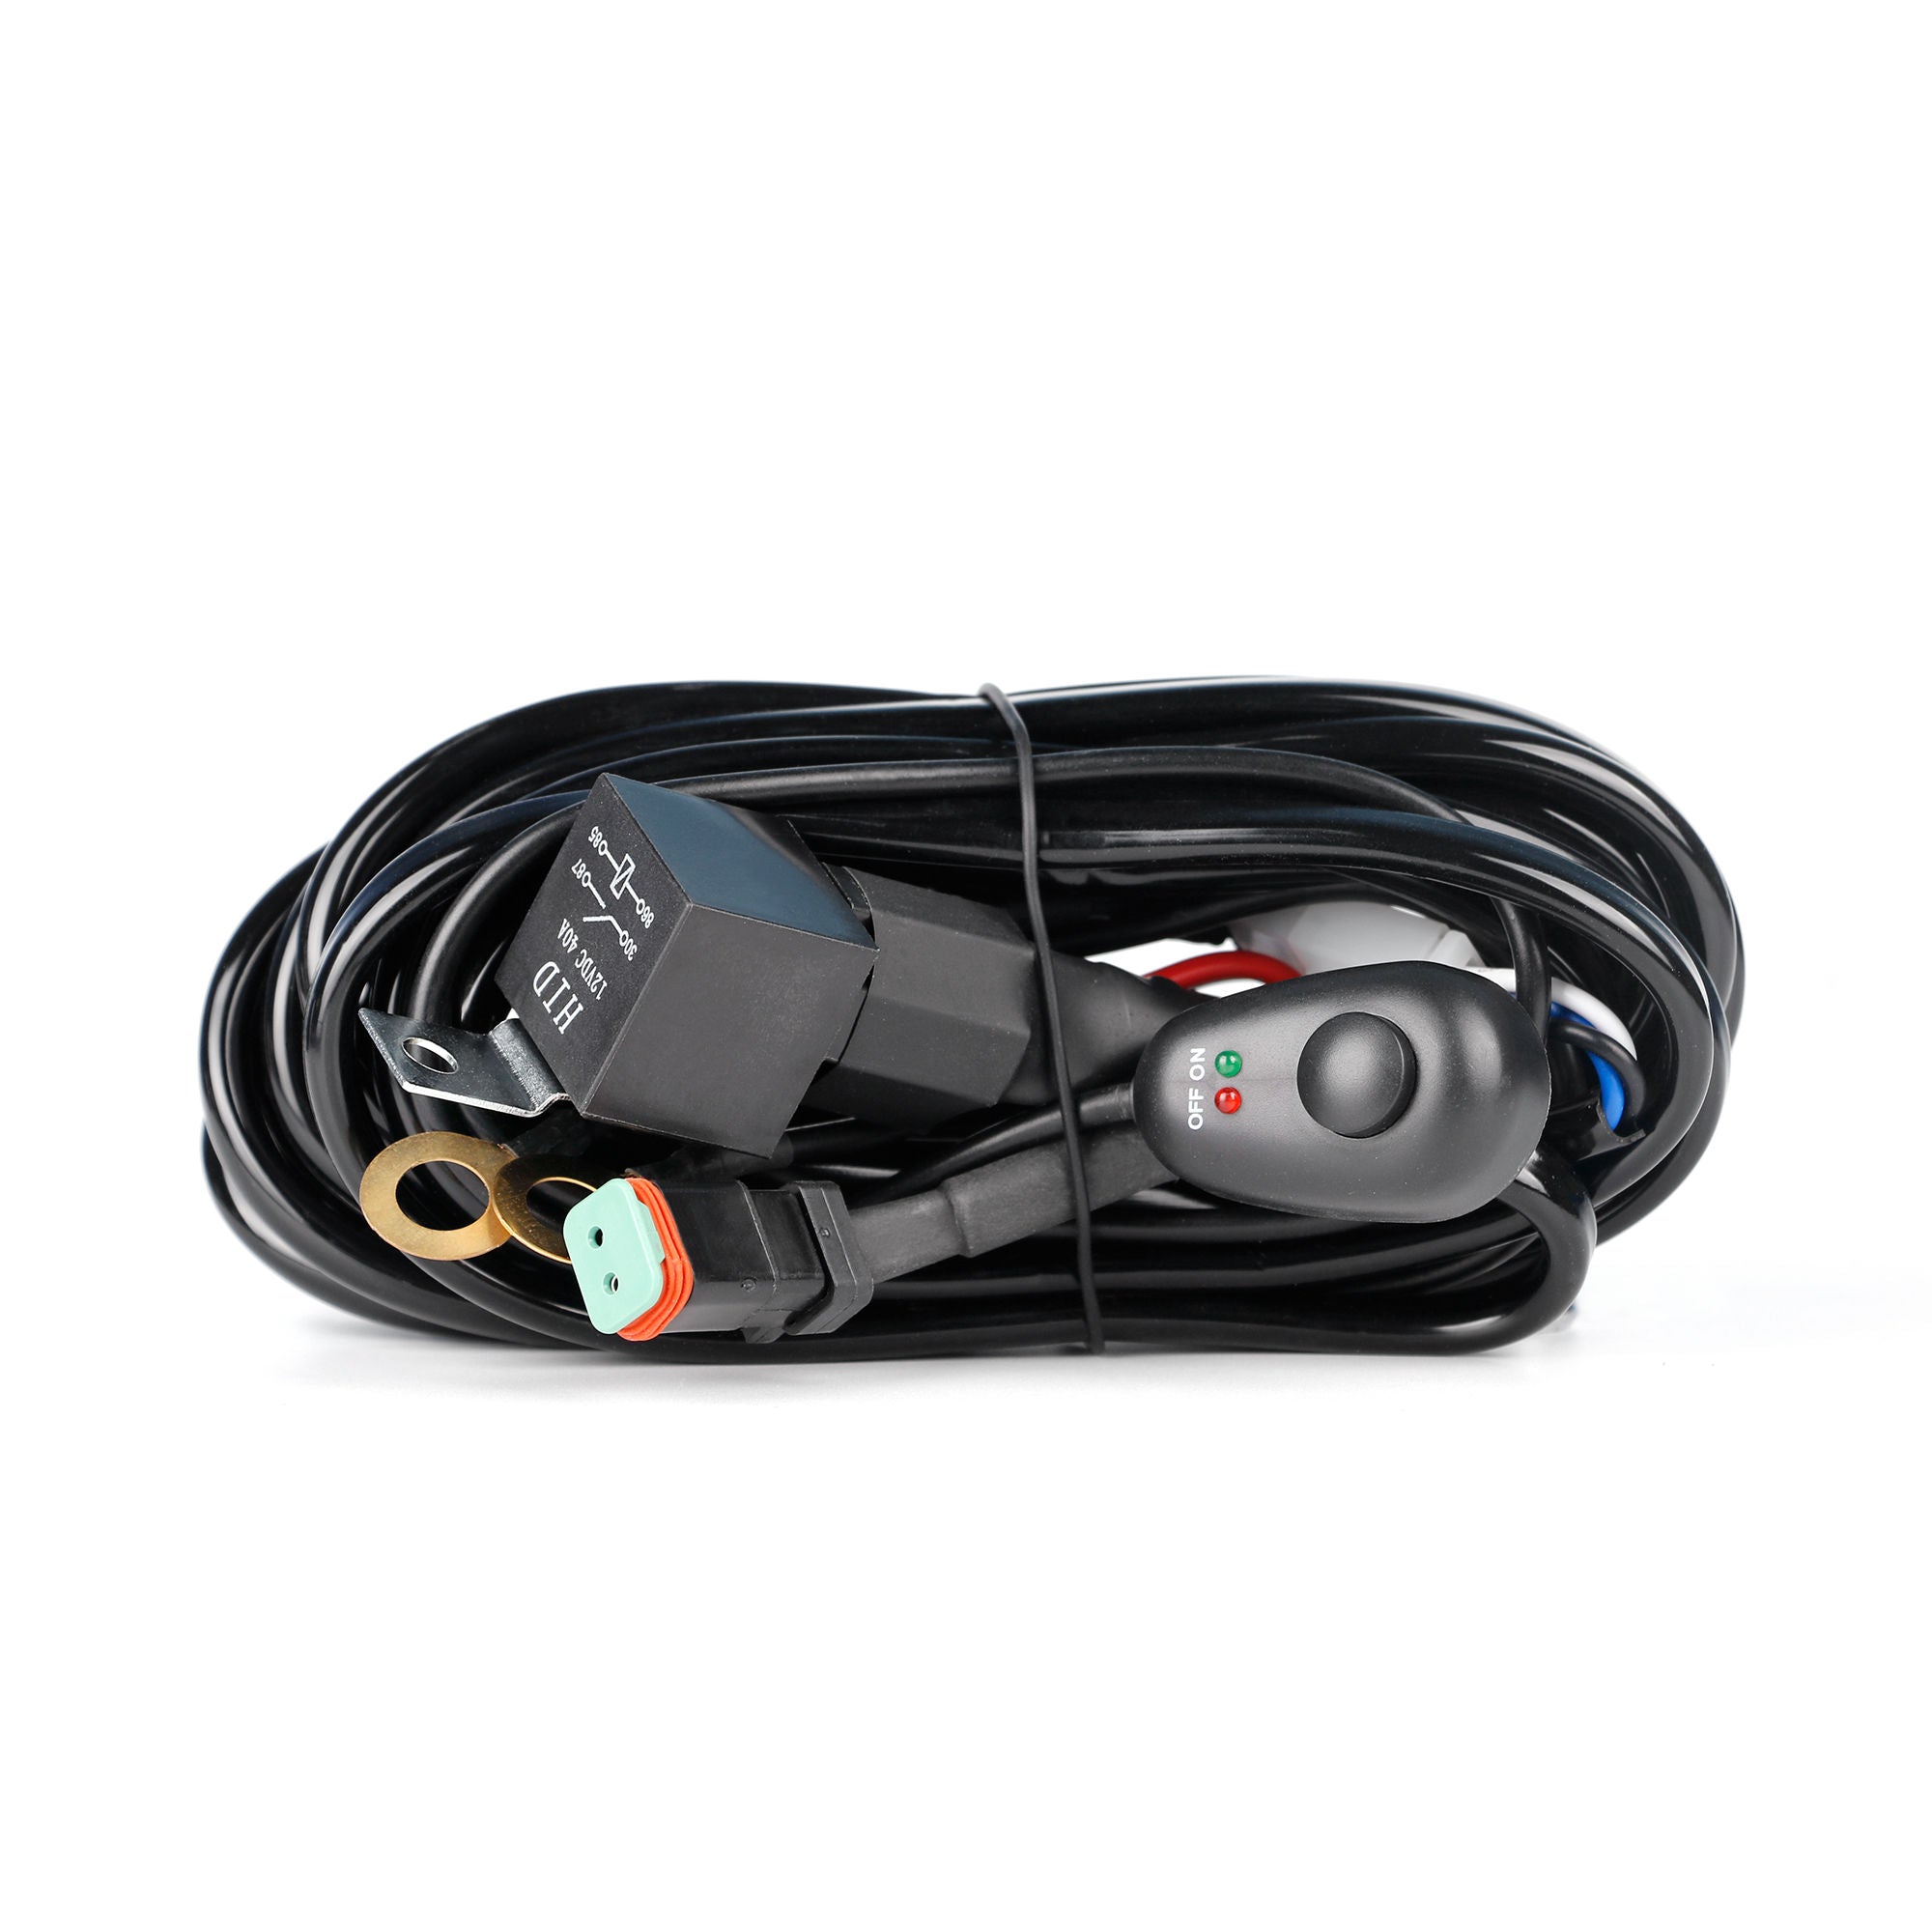 RTX RTXOA840001 - Switch & Harness, 1 outputs, Dutch 2 pins, Max 288W